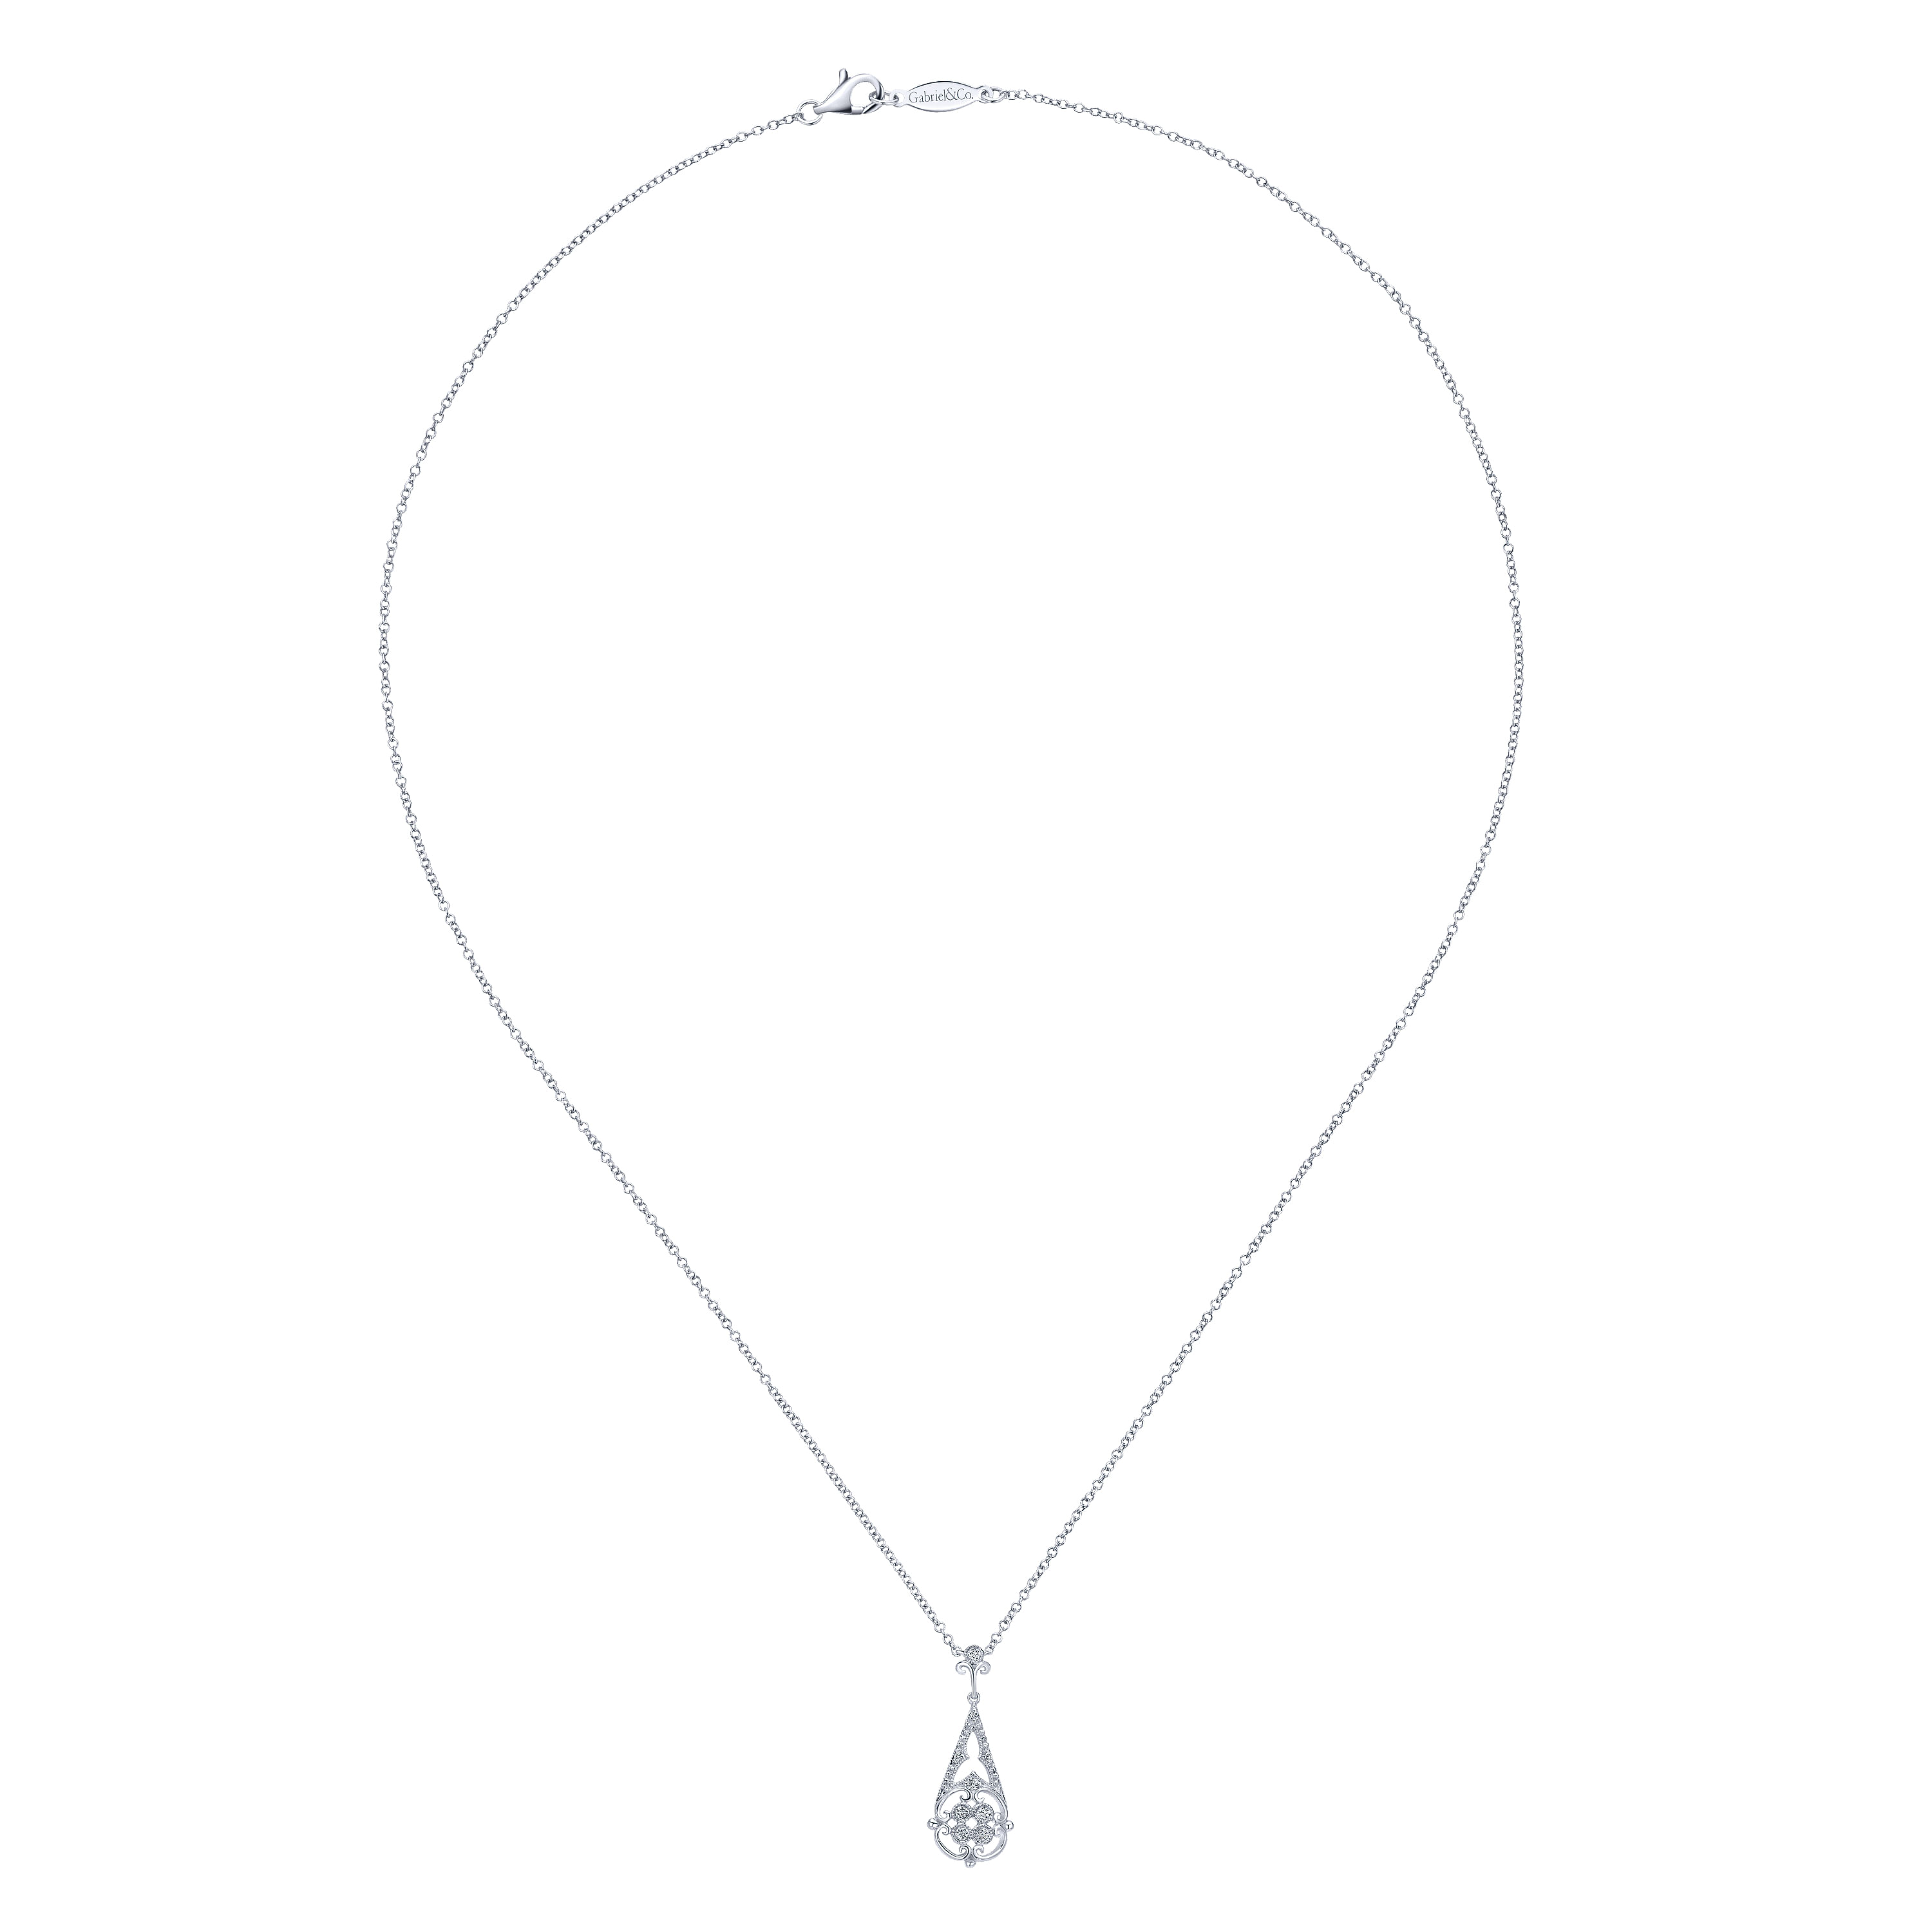 Vintage Inspired 14K White Gold Diamond Teardrop Pendant Necklace